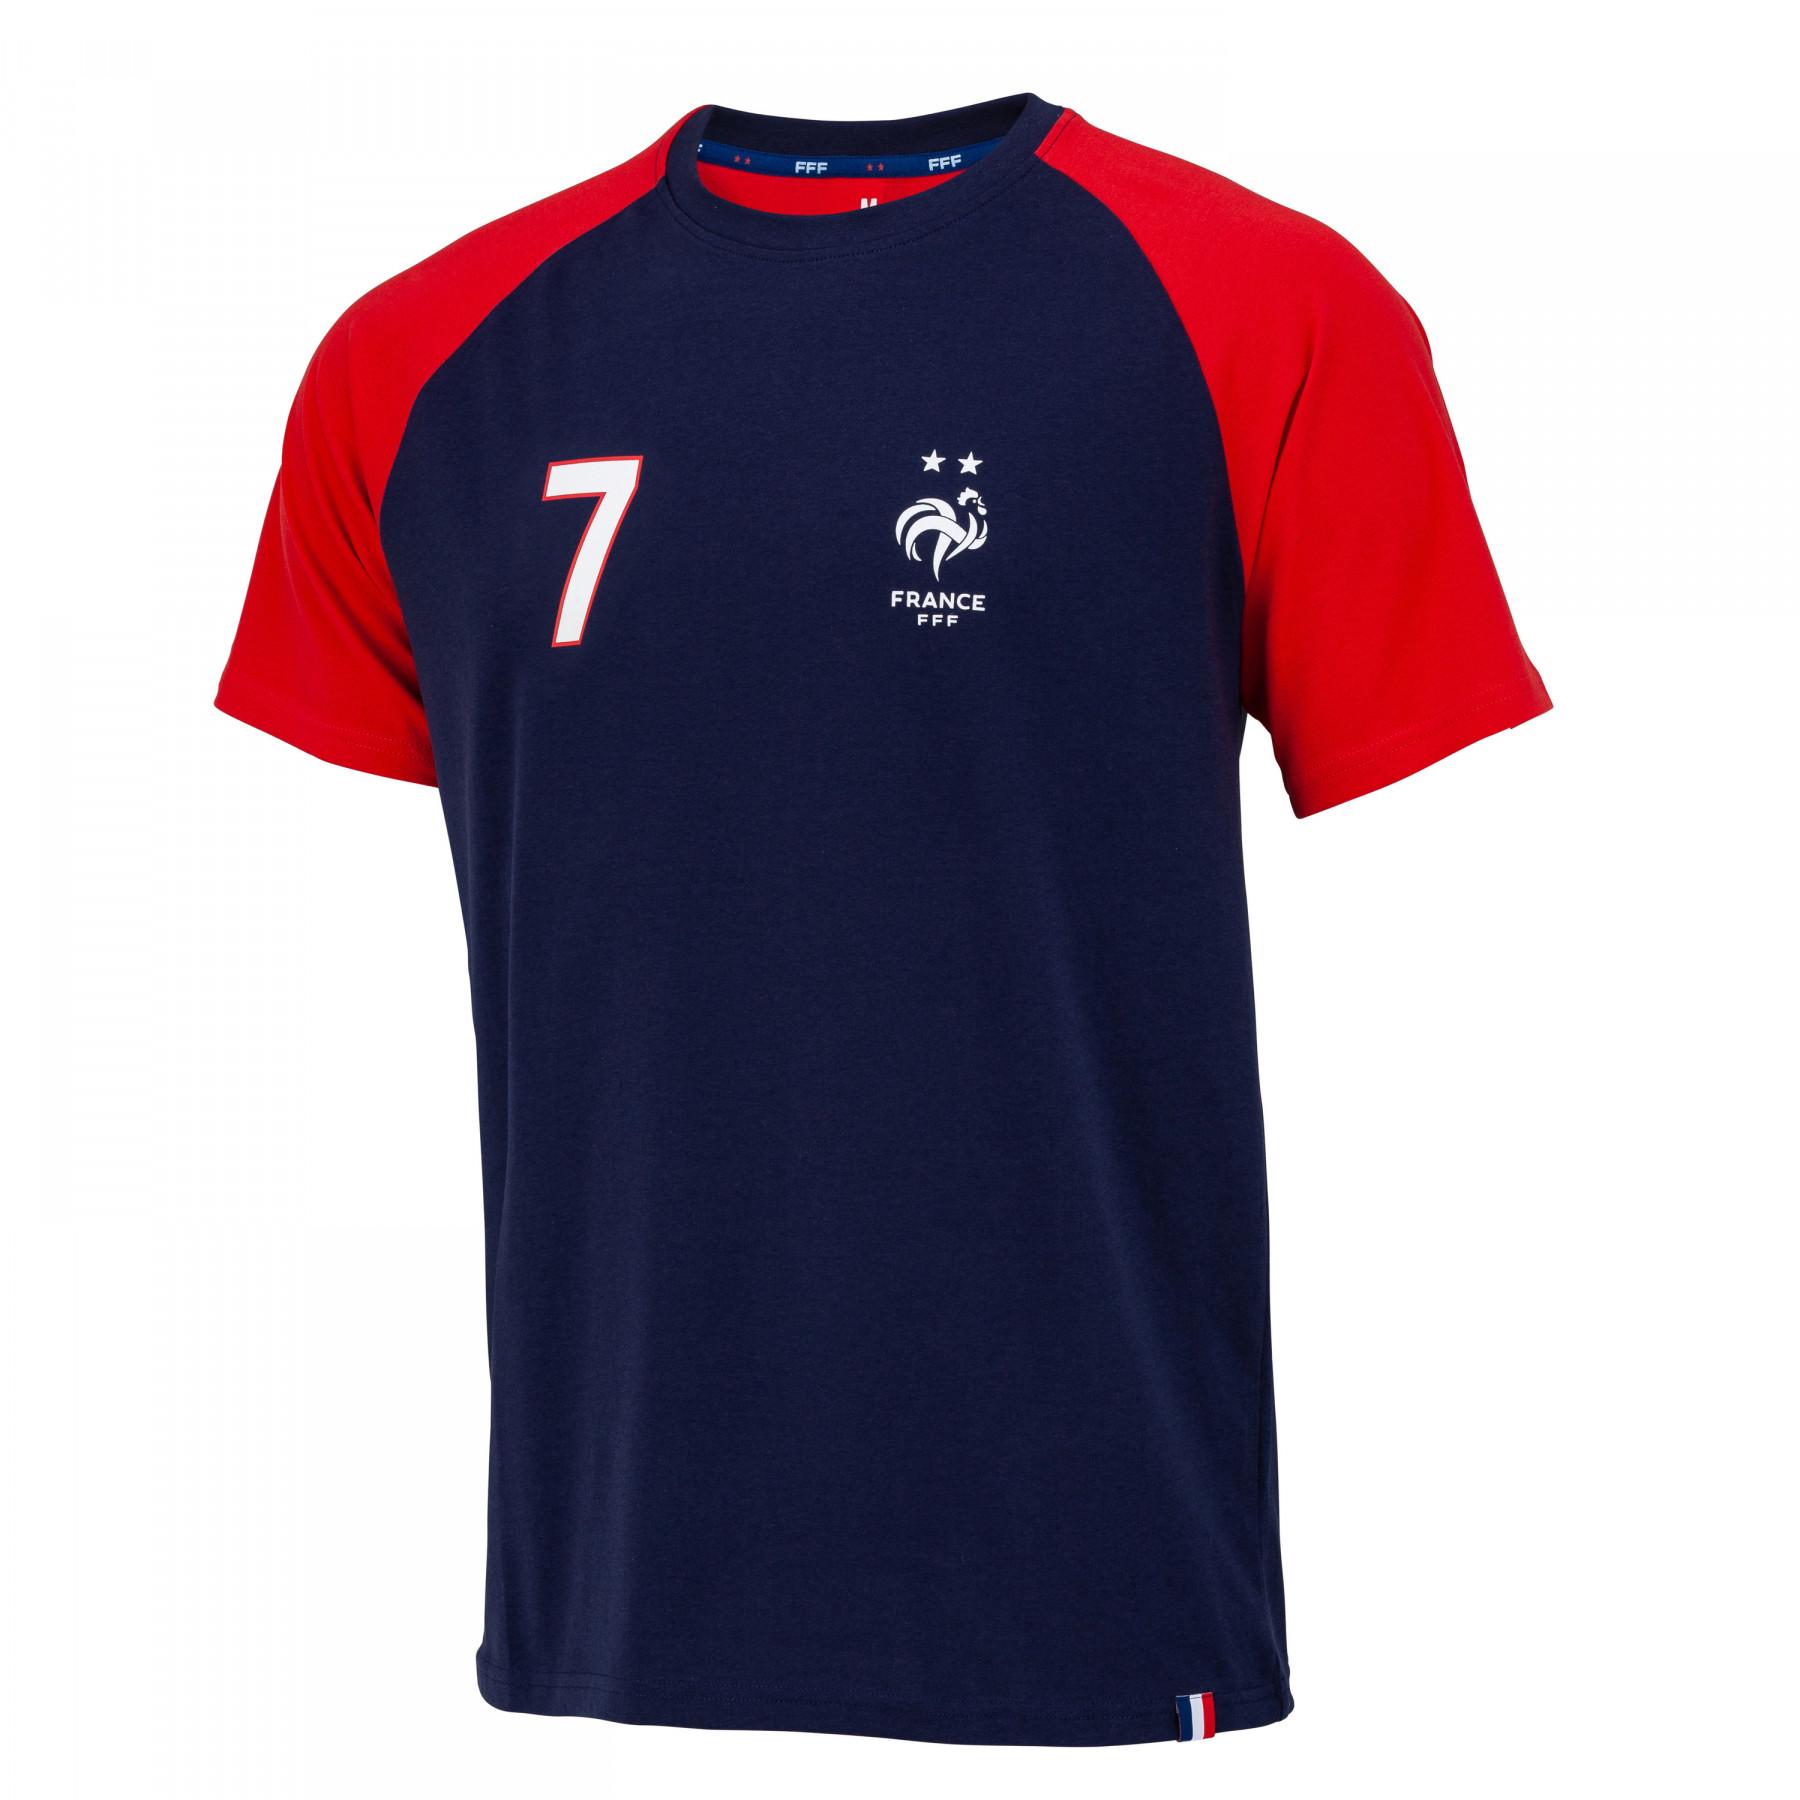 T-shirt criança FFF Player Griezmann N°7